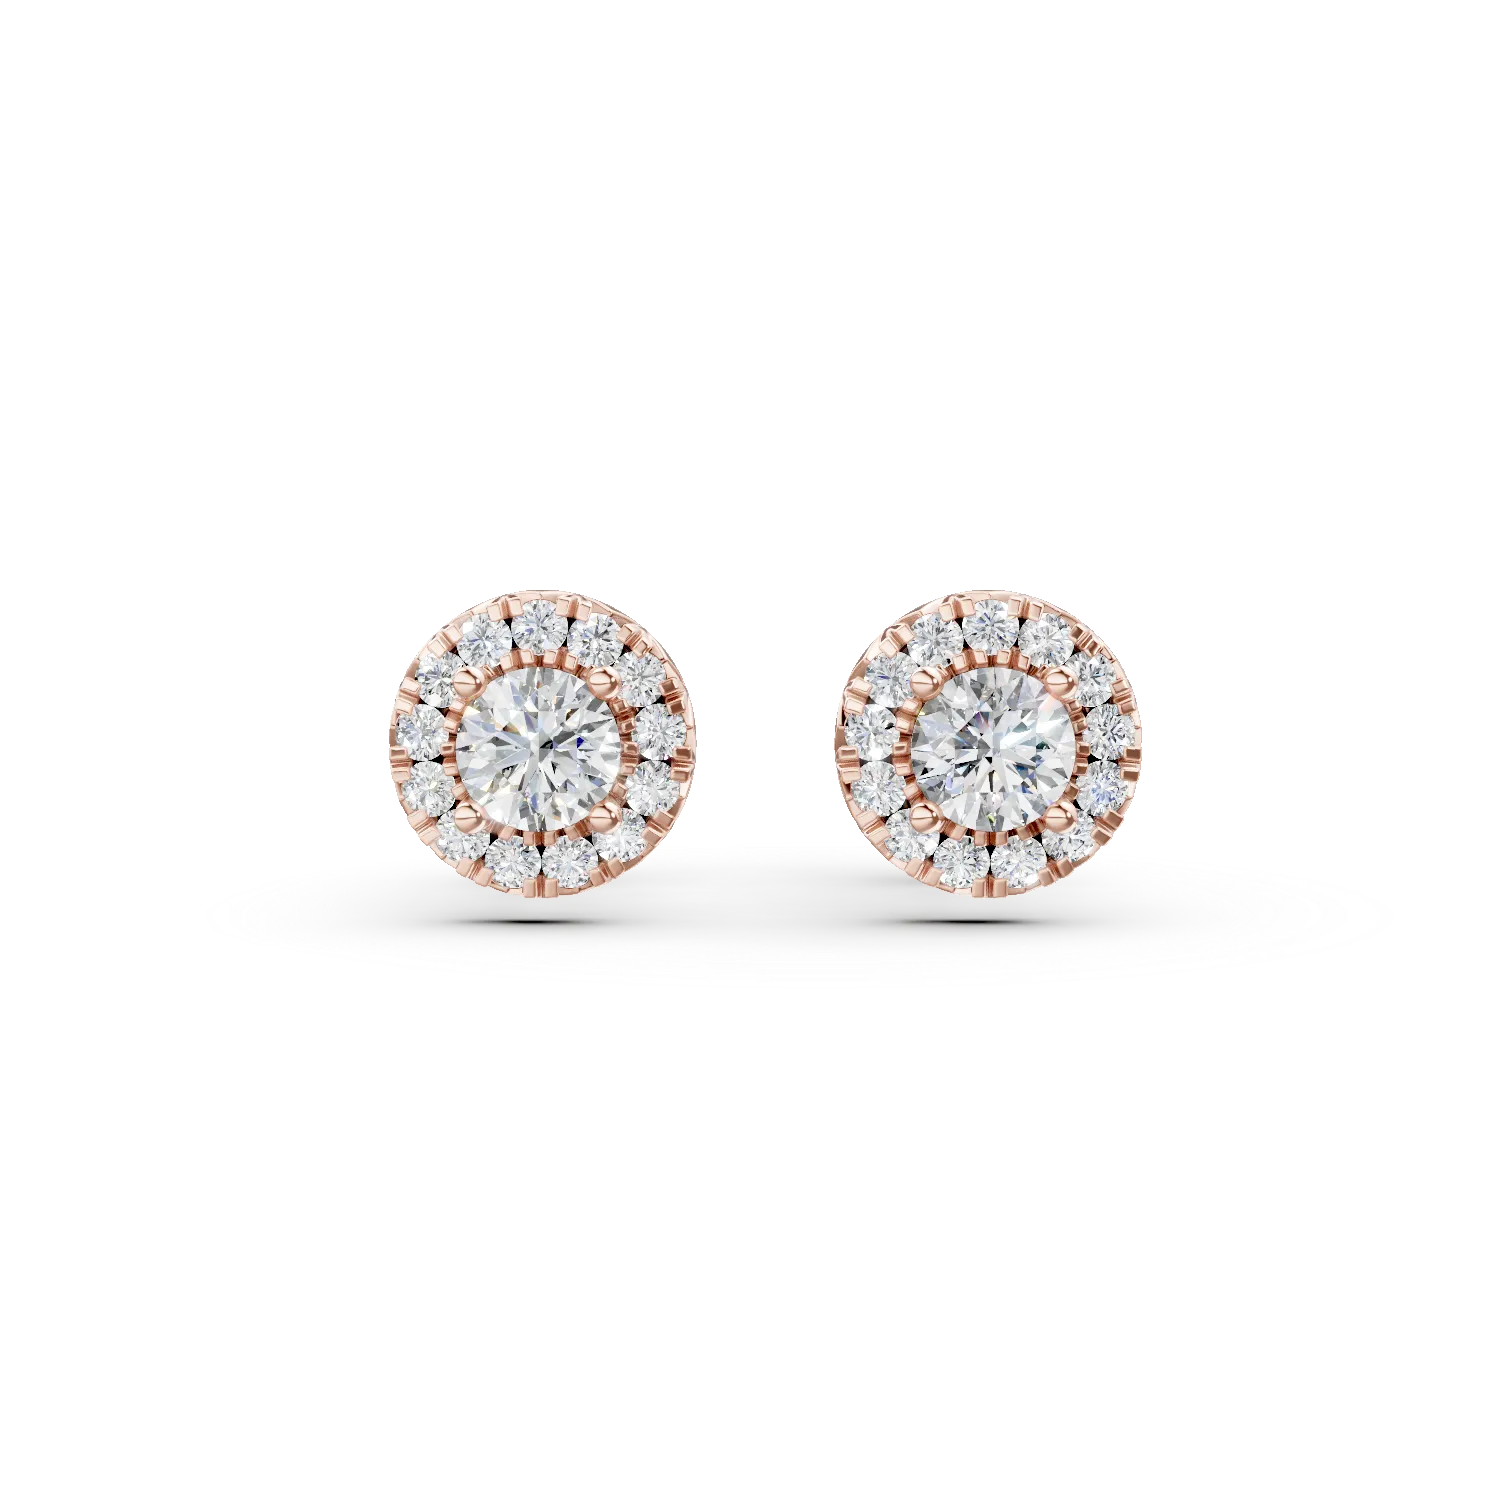 Cercei rotunzi din aur roz cu diamante de 1.1ct create in laborator